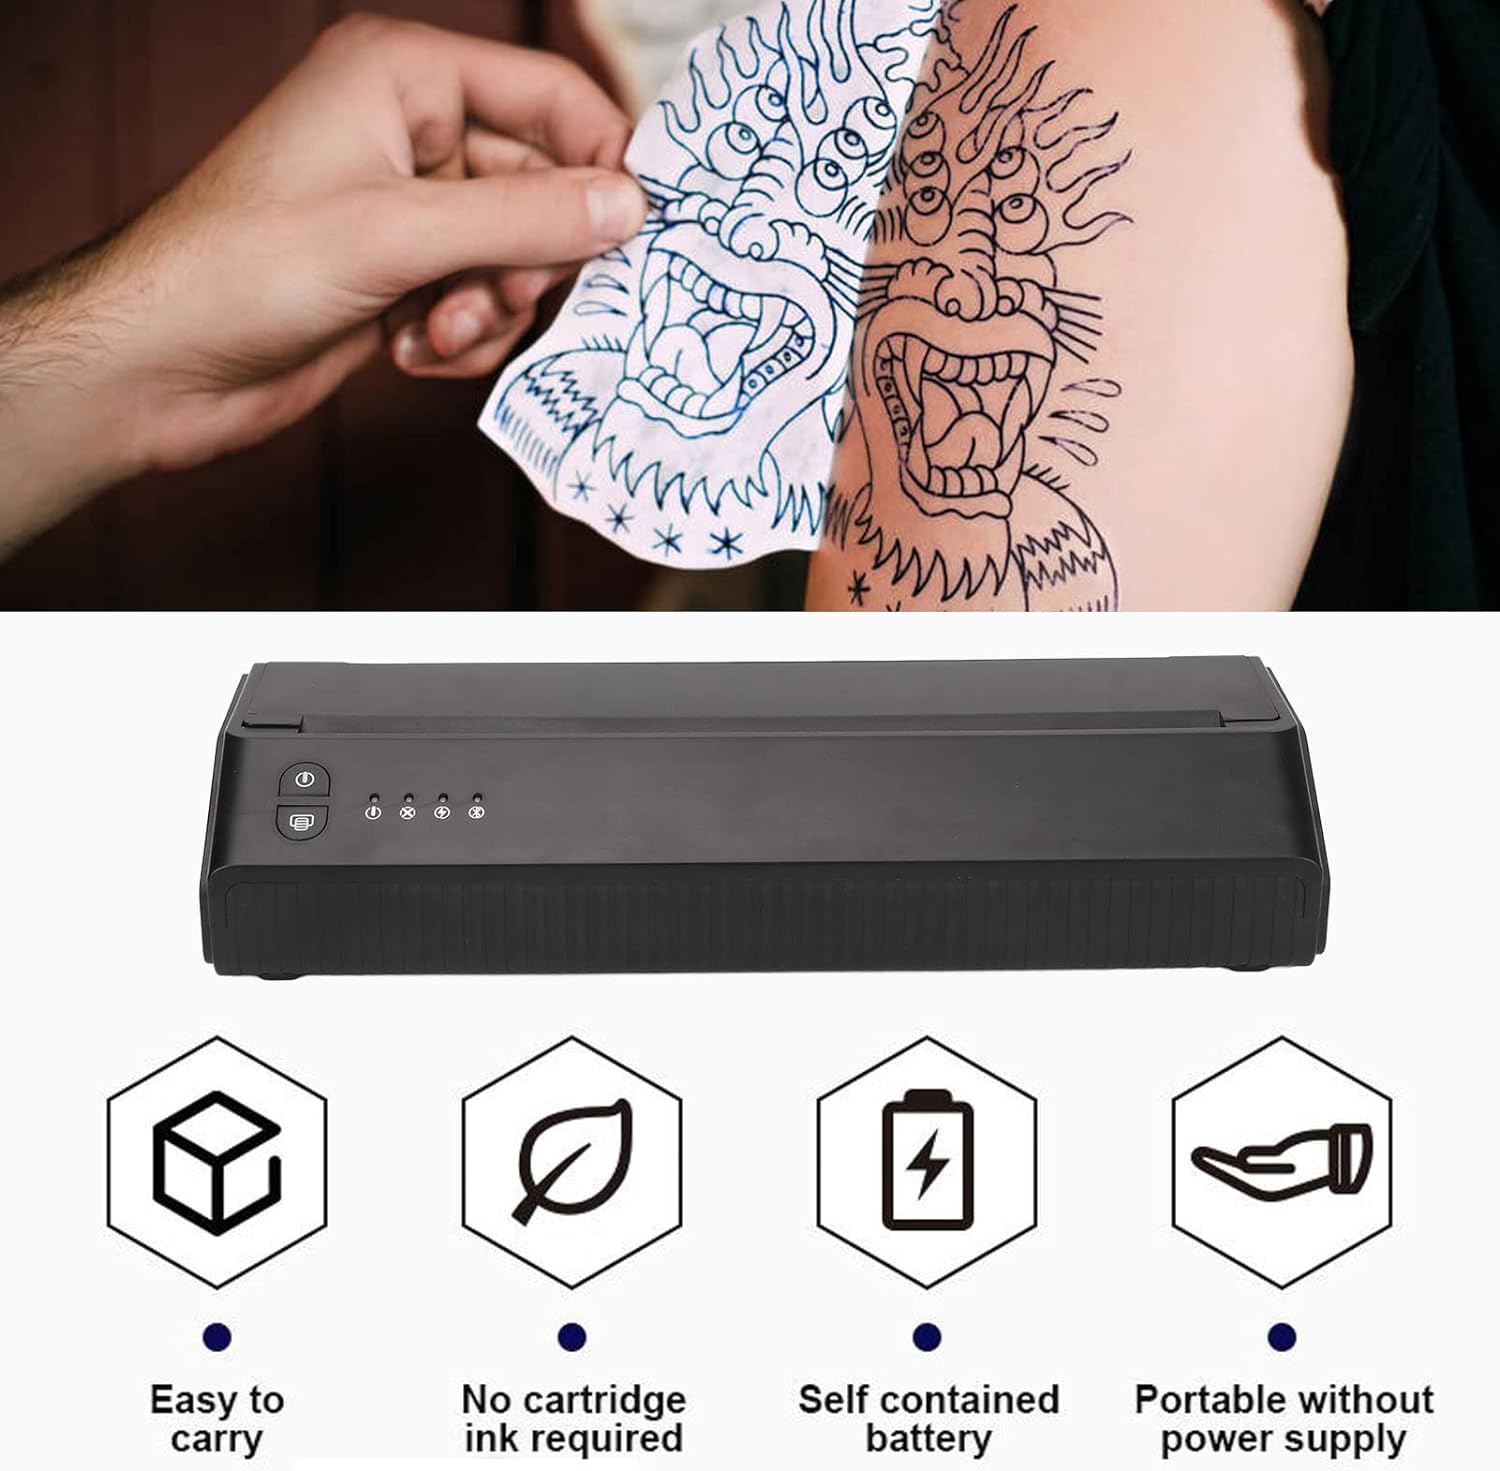 New 2500mAh Minitype Tattoo Thermal Transfer Machine Printer with  Bluetoooth+USB